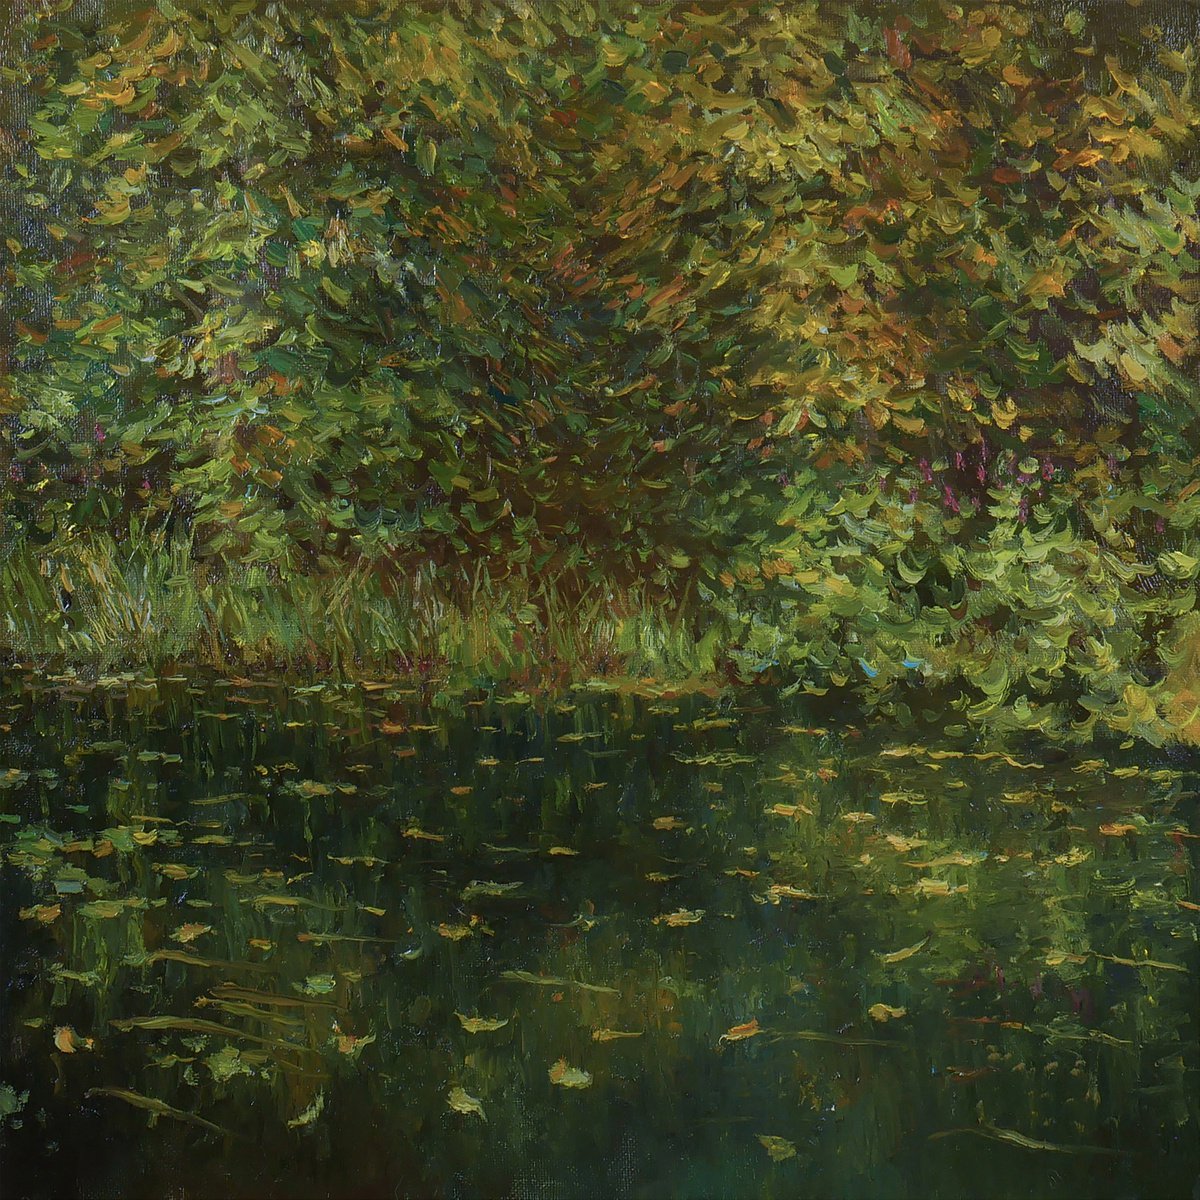 The Autumn Backwater - sunny river landscape painting by Nikolay Dmitriev